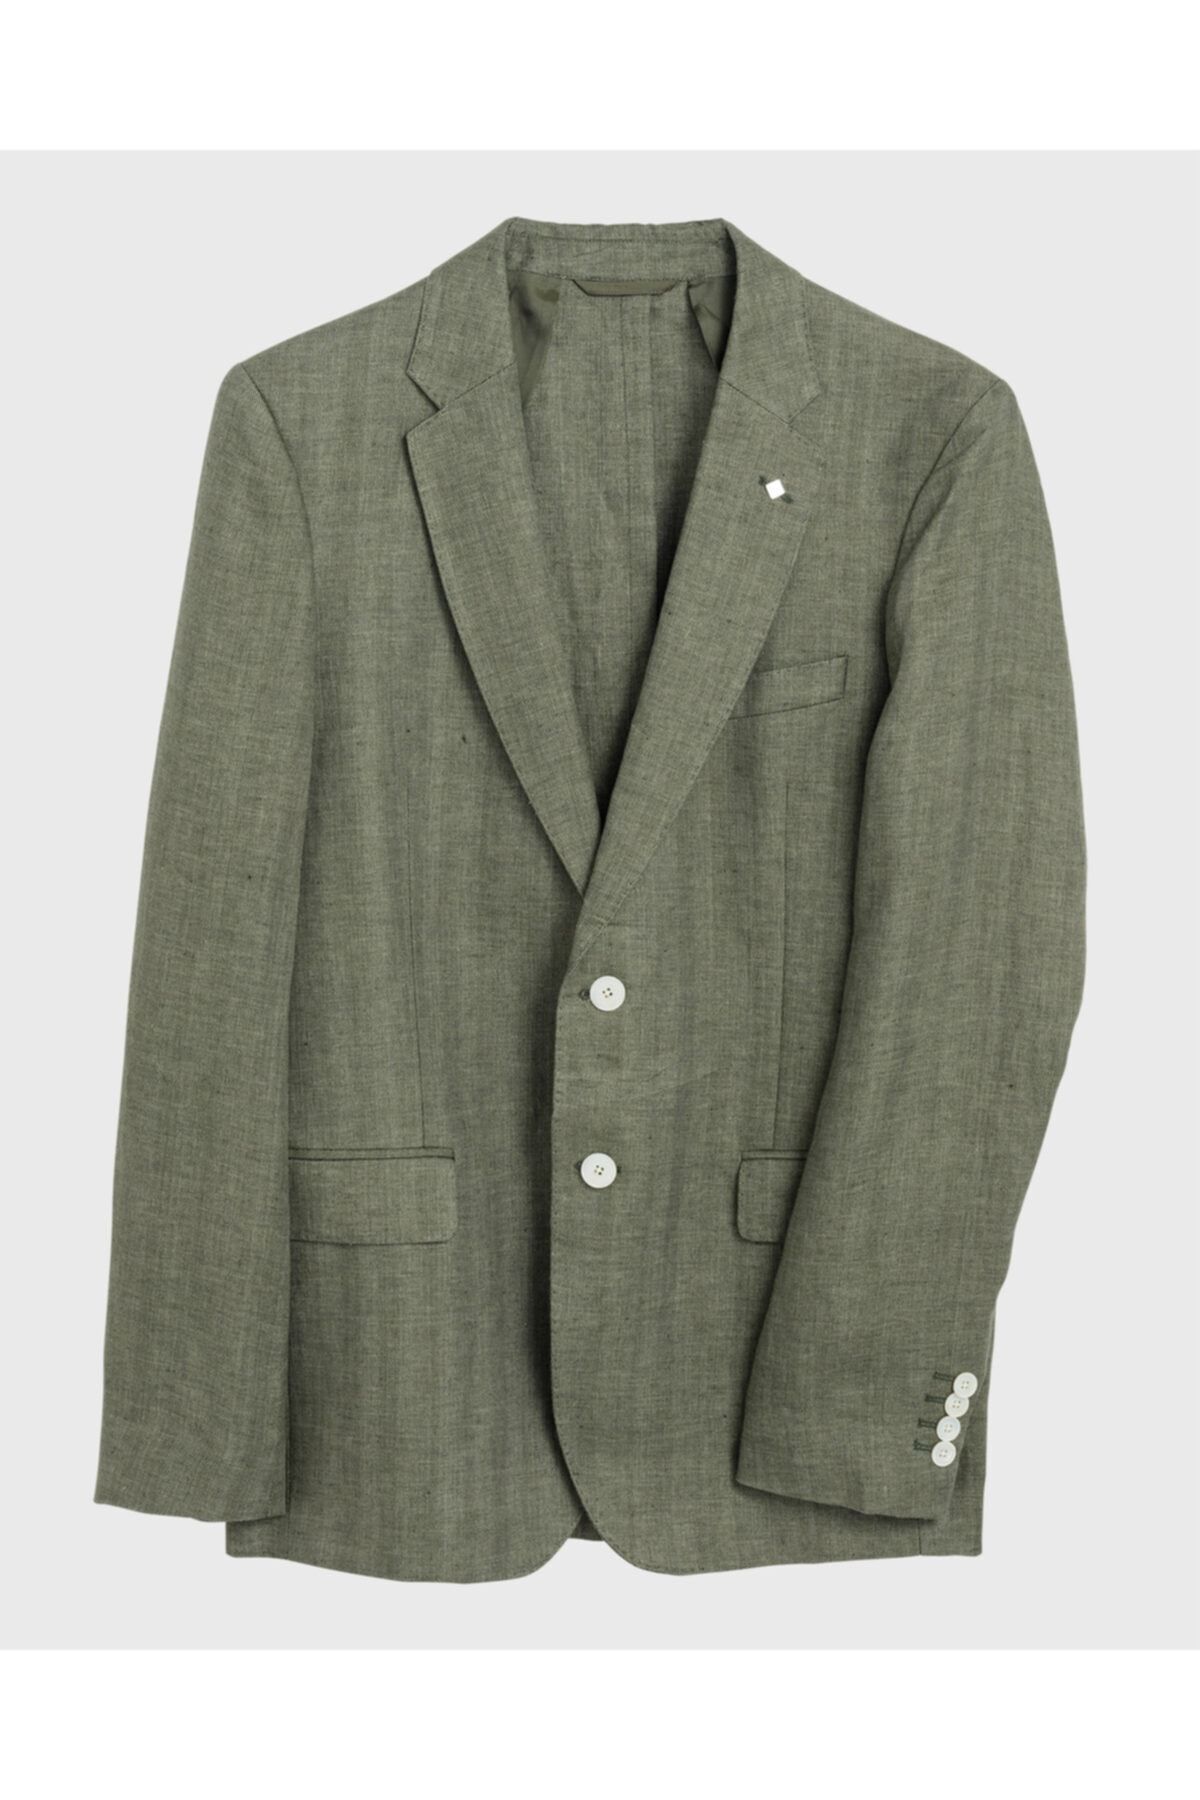 Gant Erkek Slim Fit Yeşil Keten Blazer Ceket 7539